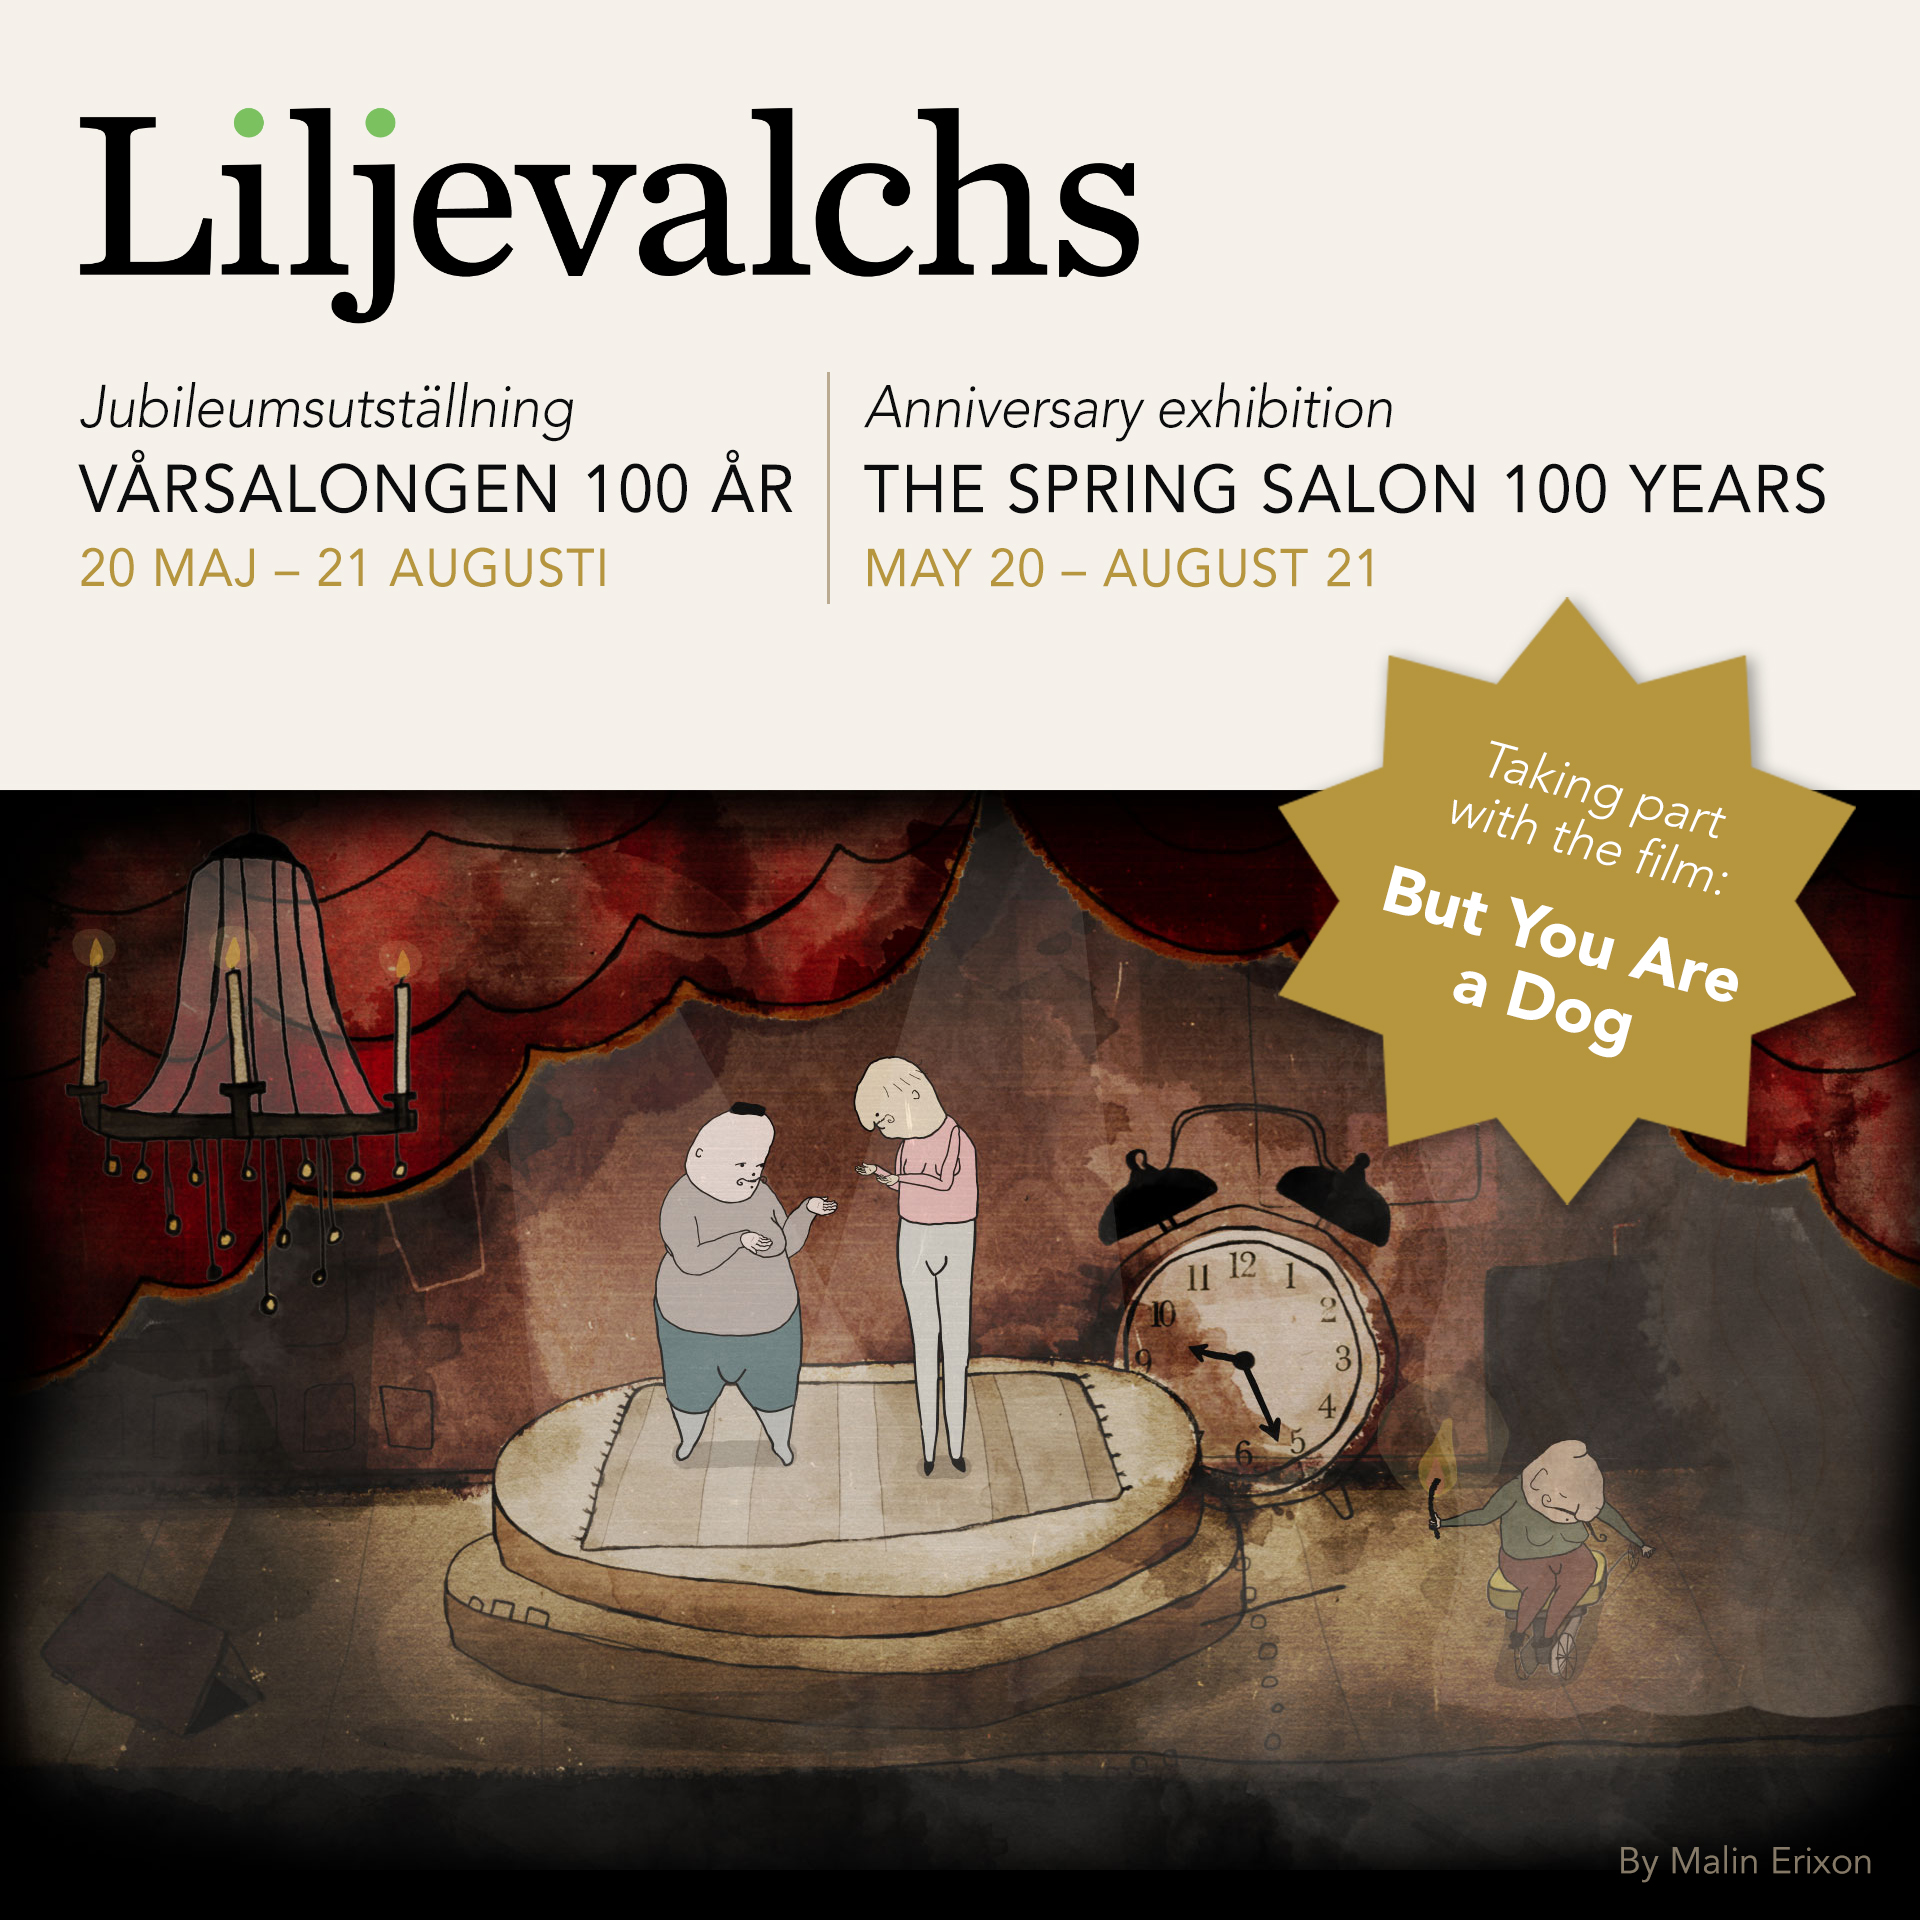 Liljevalchs Spring Salon 100 years